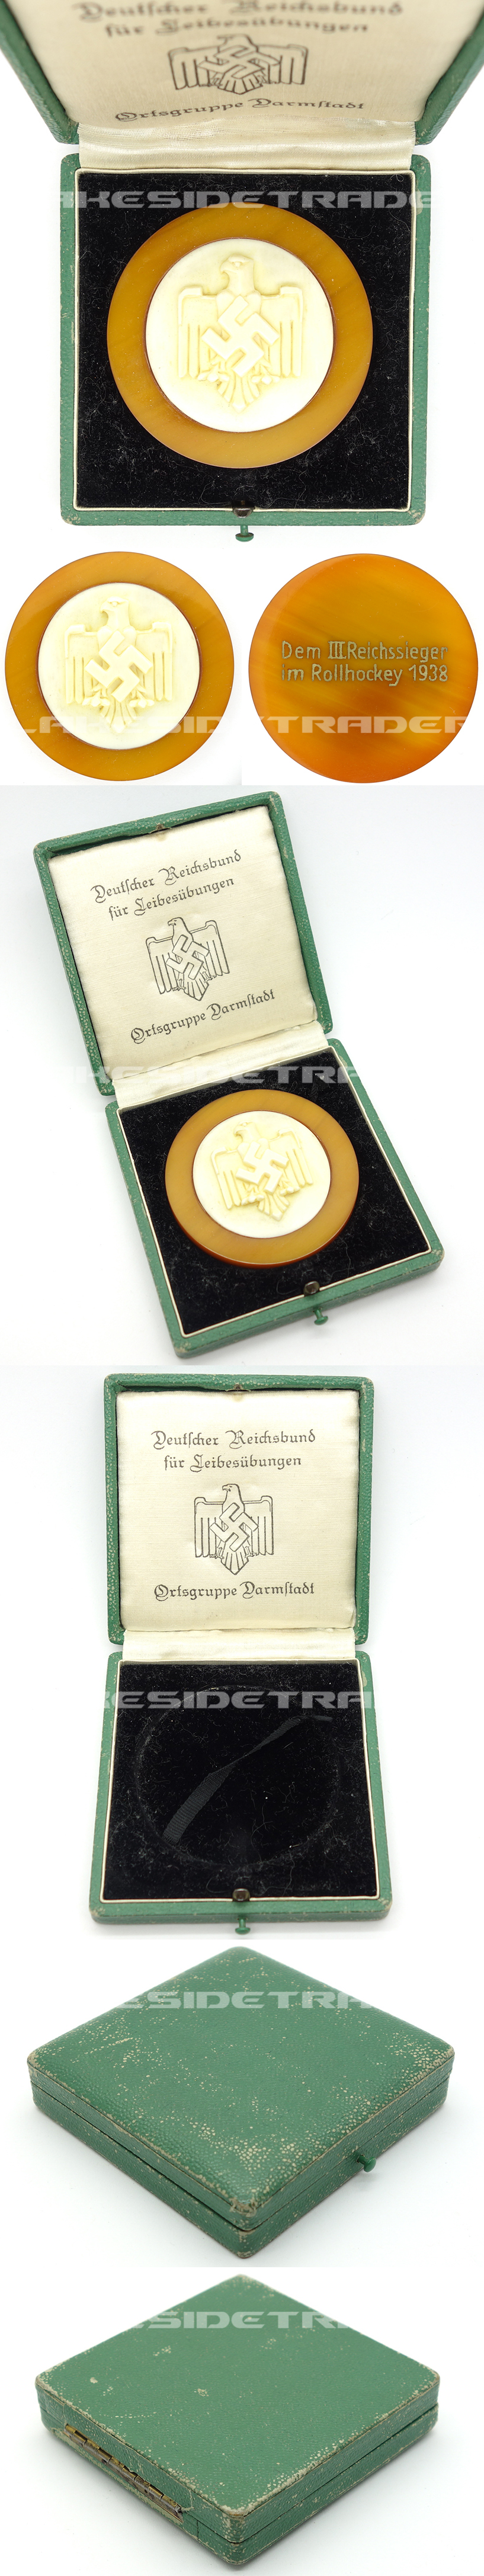 DRL Roller Hockey Winner Non-Portable Award 1938